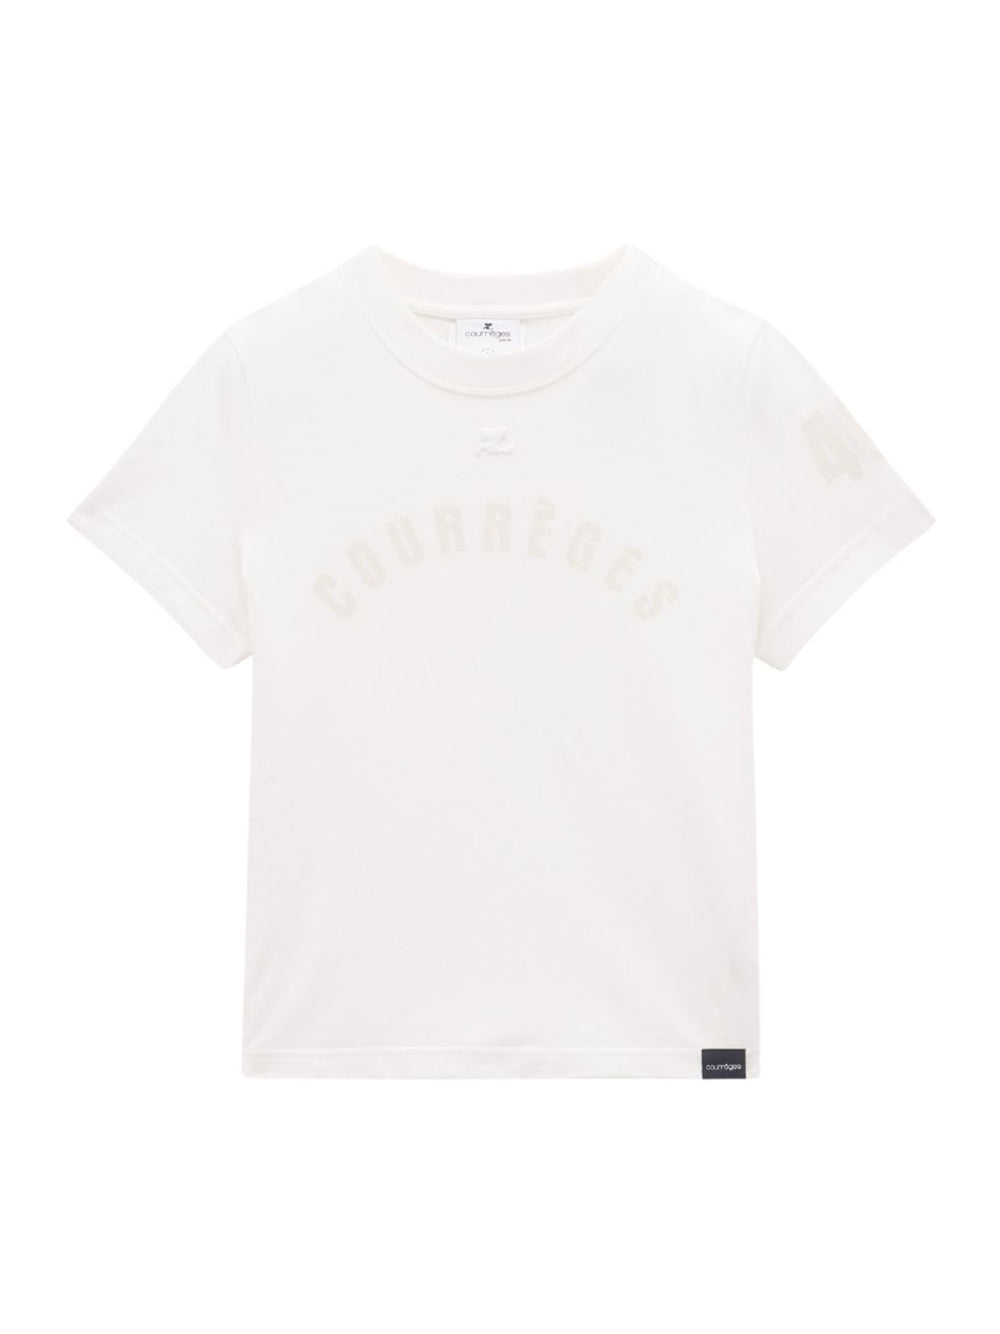 AC Straight Print T-Shirt (Heritage White)